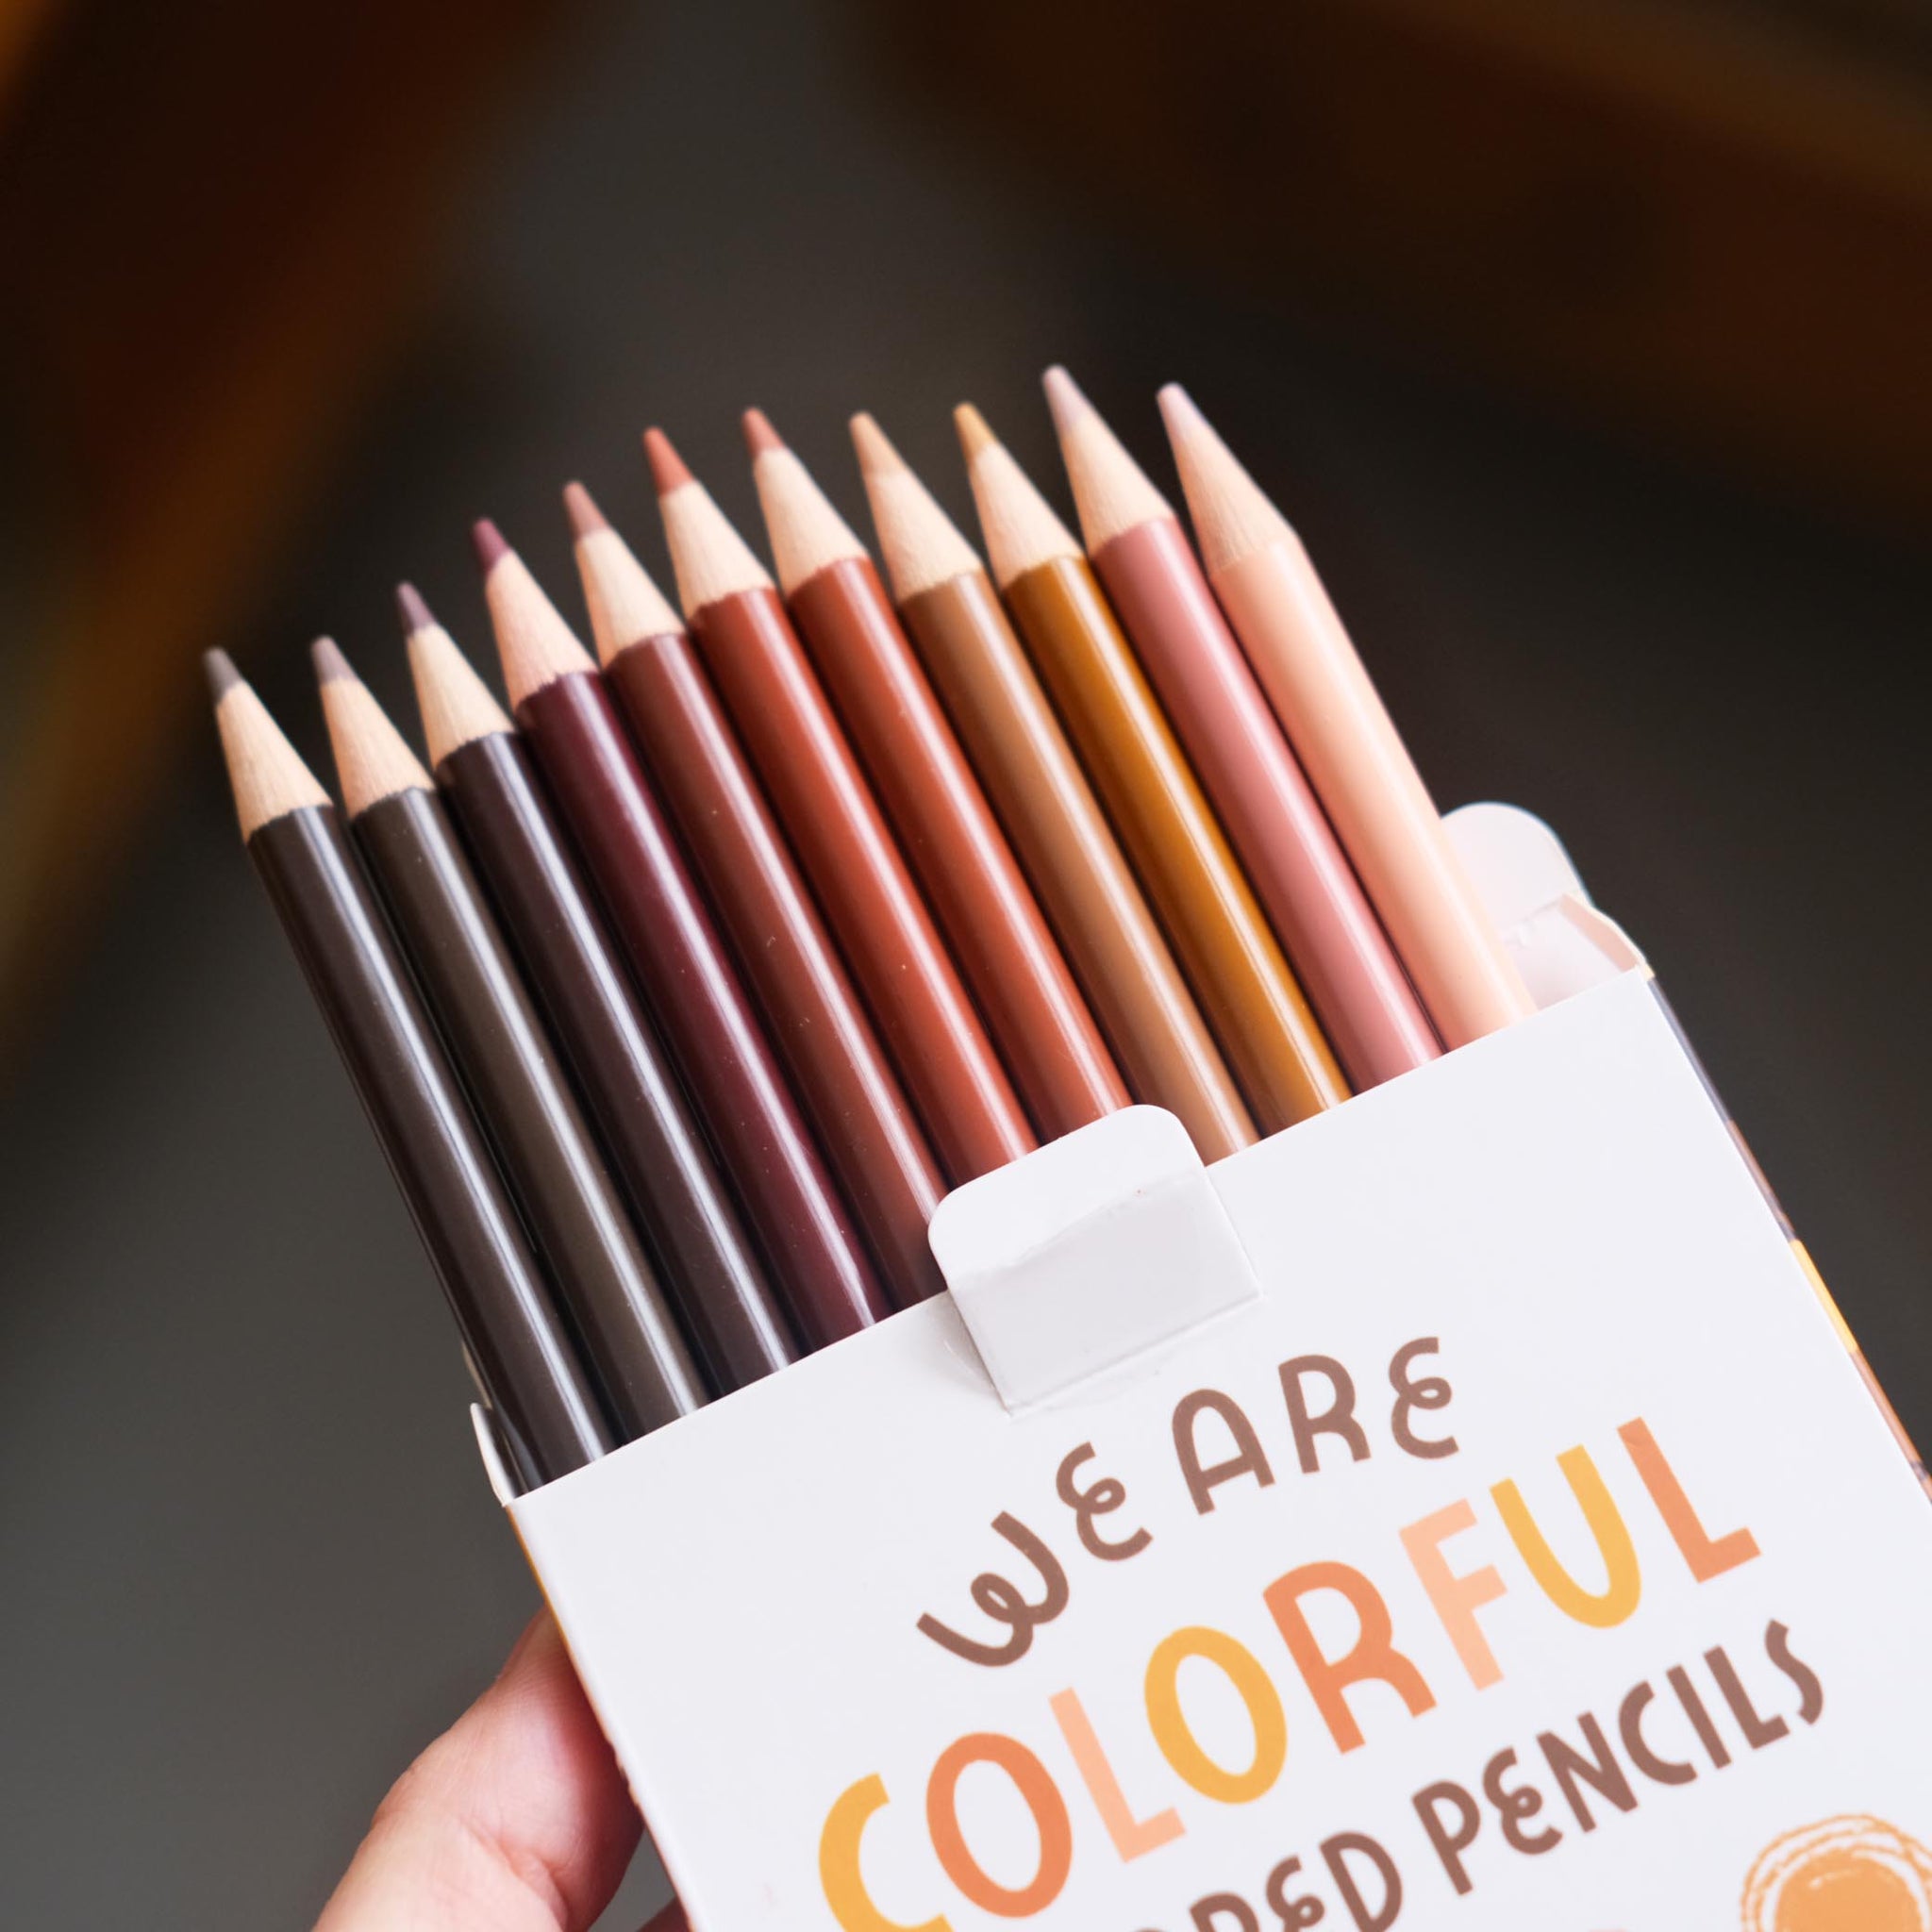 Skin Tone Colored Pencils